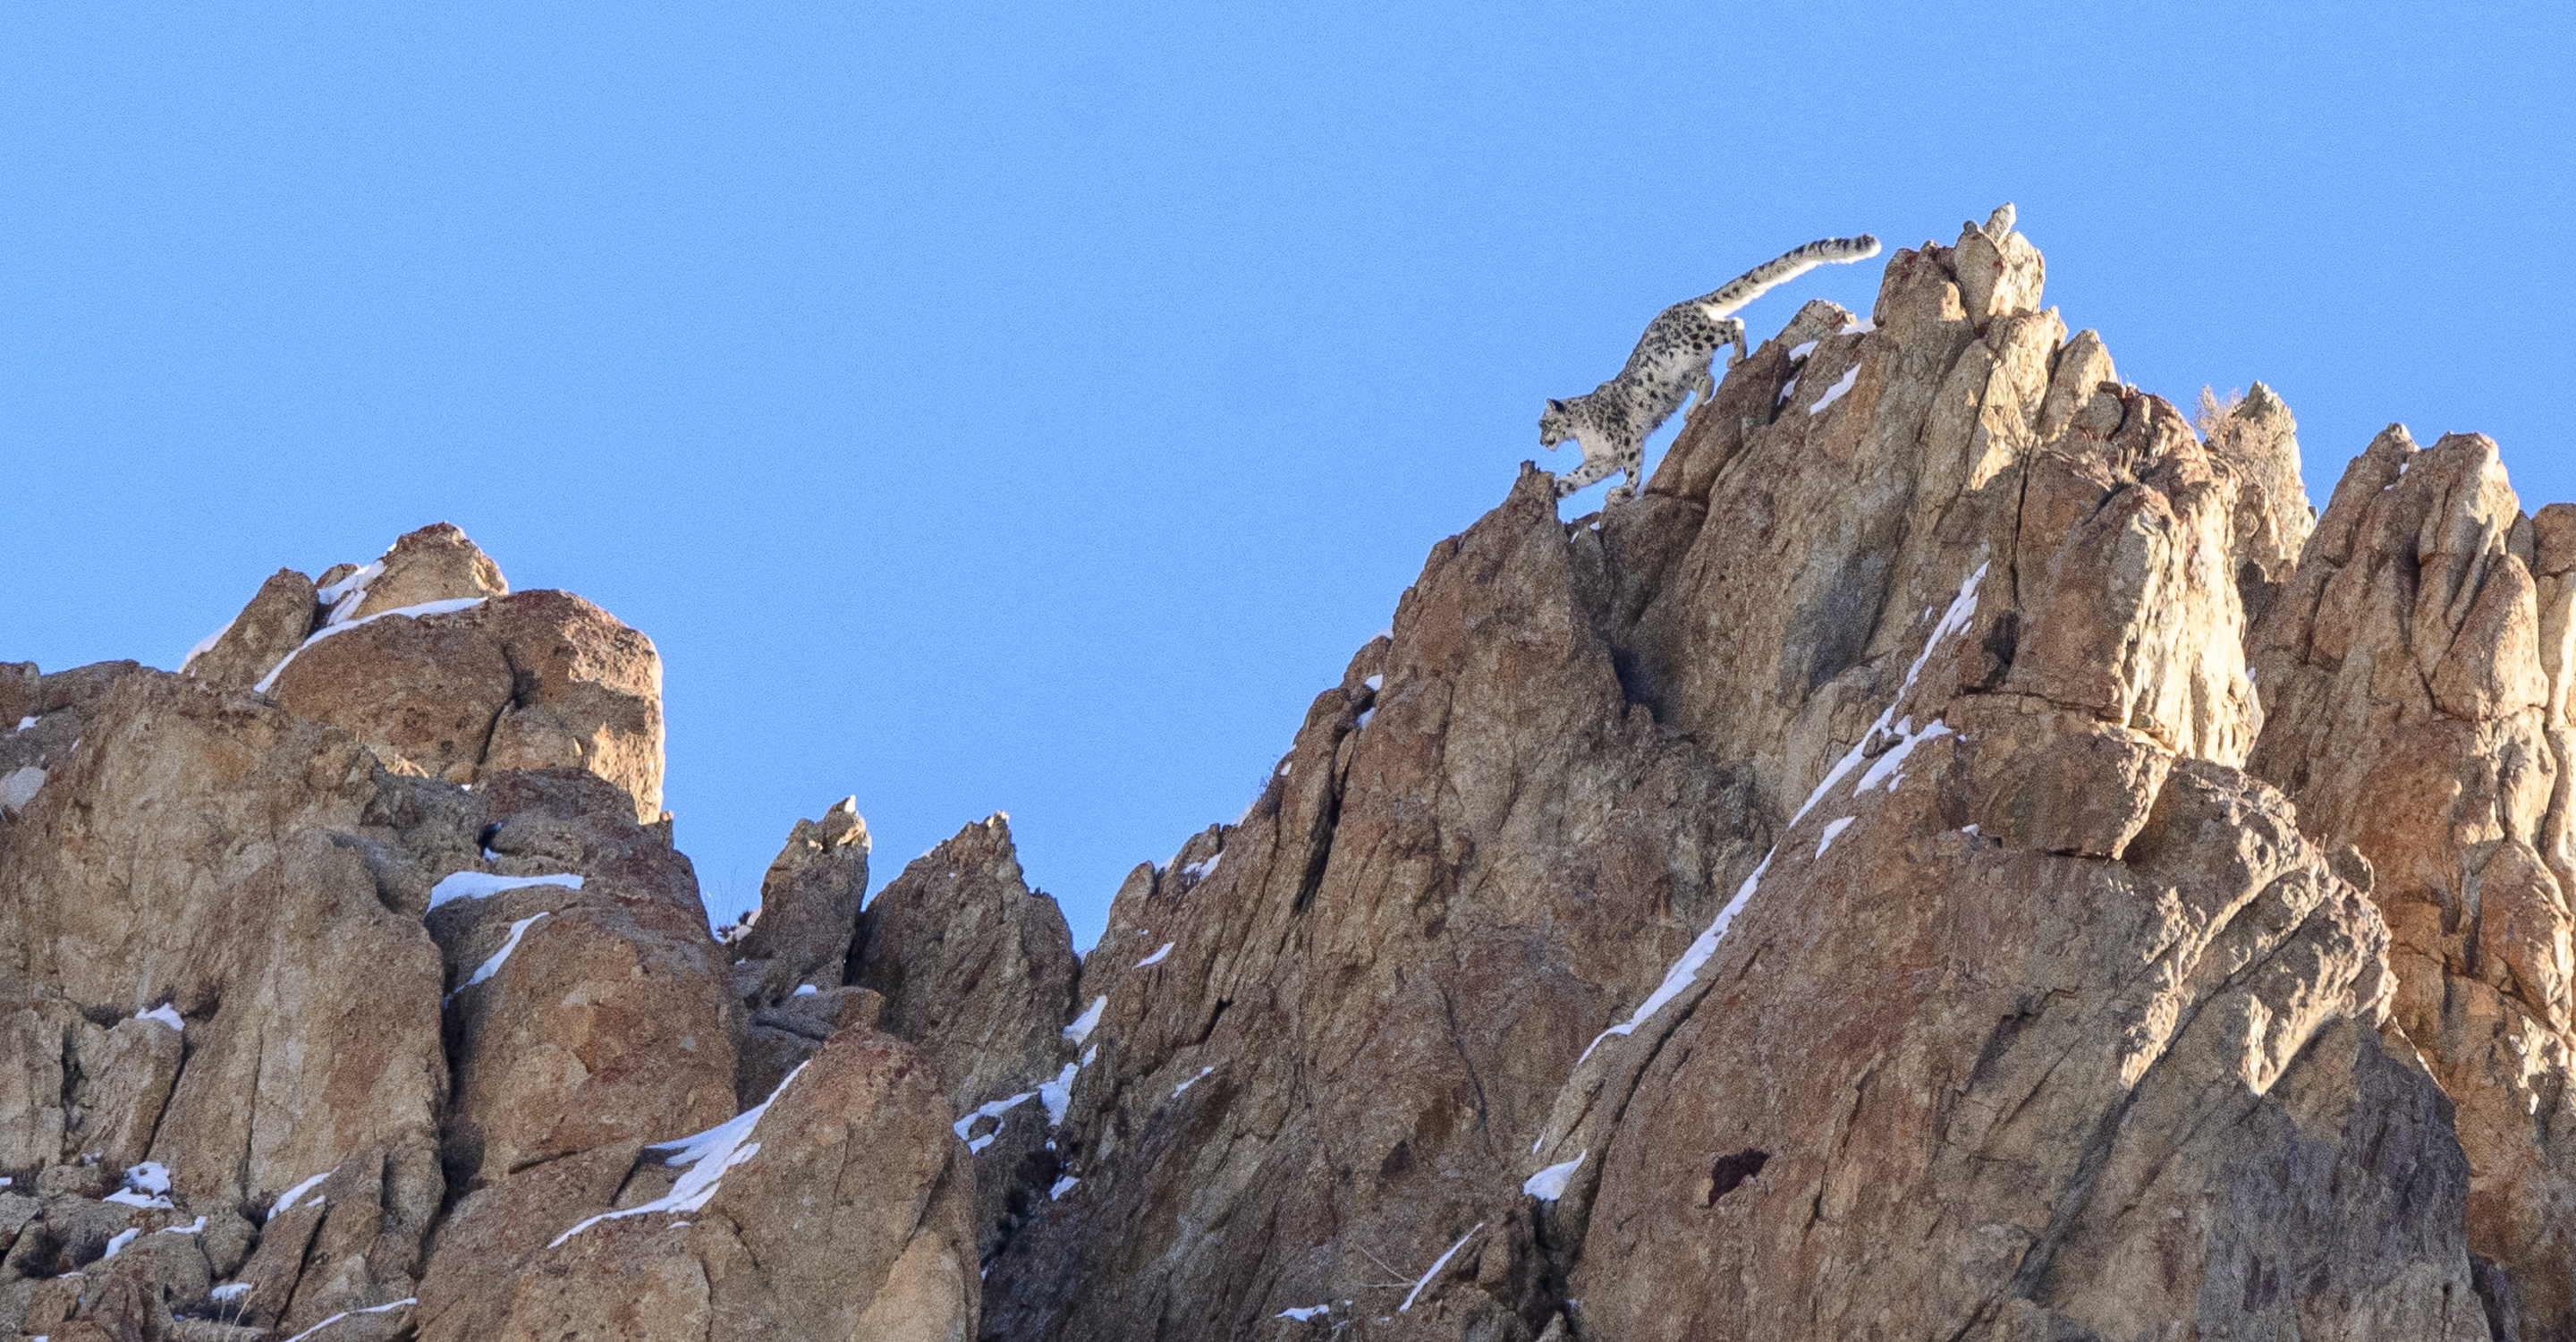 Snow Leopard Quest: A Photo Pro Expedition